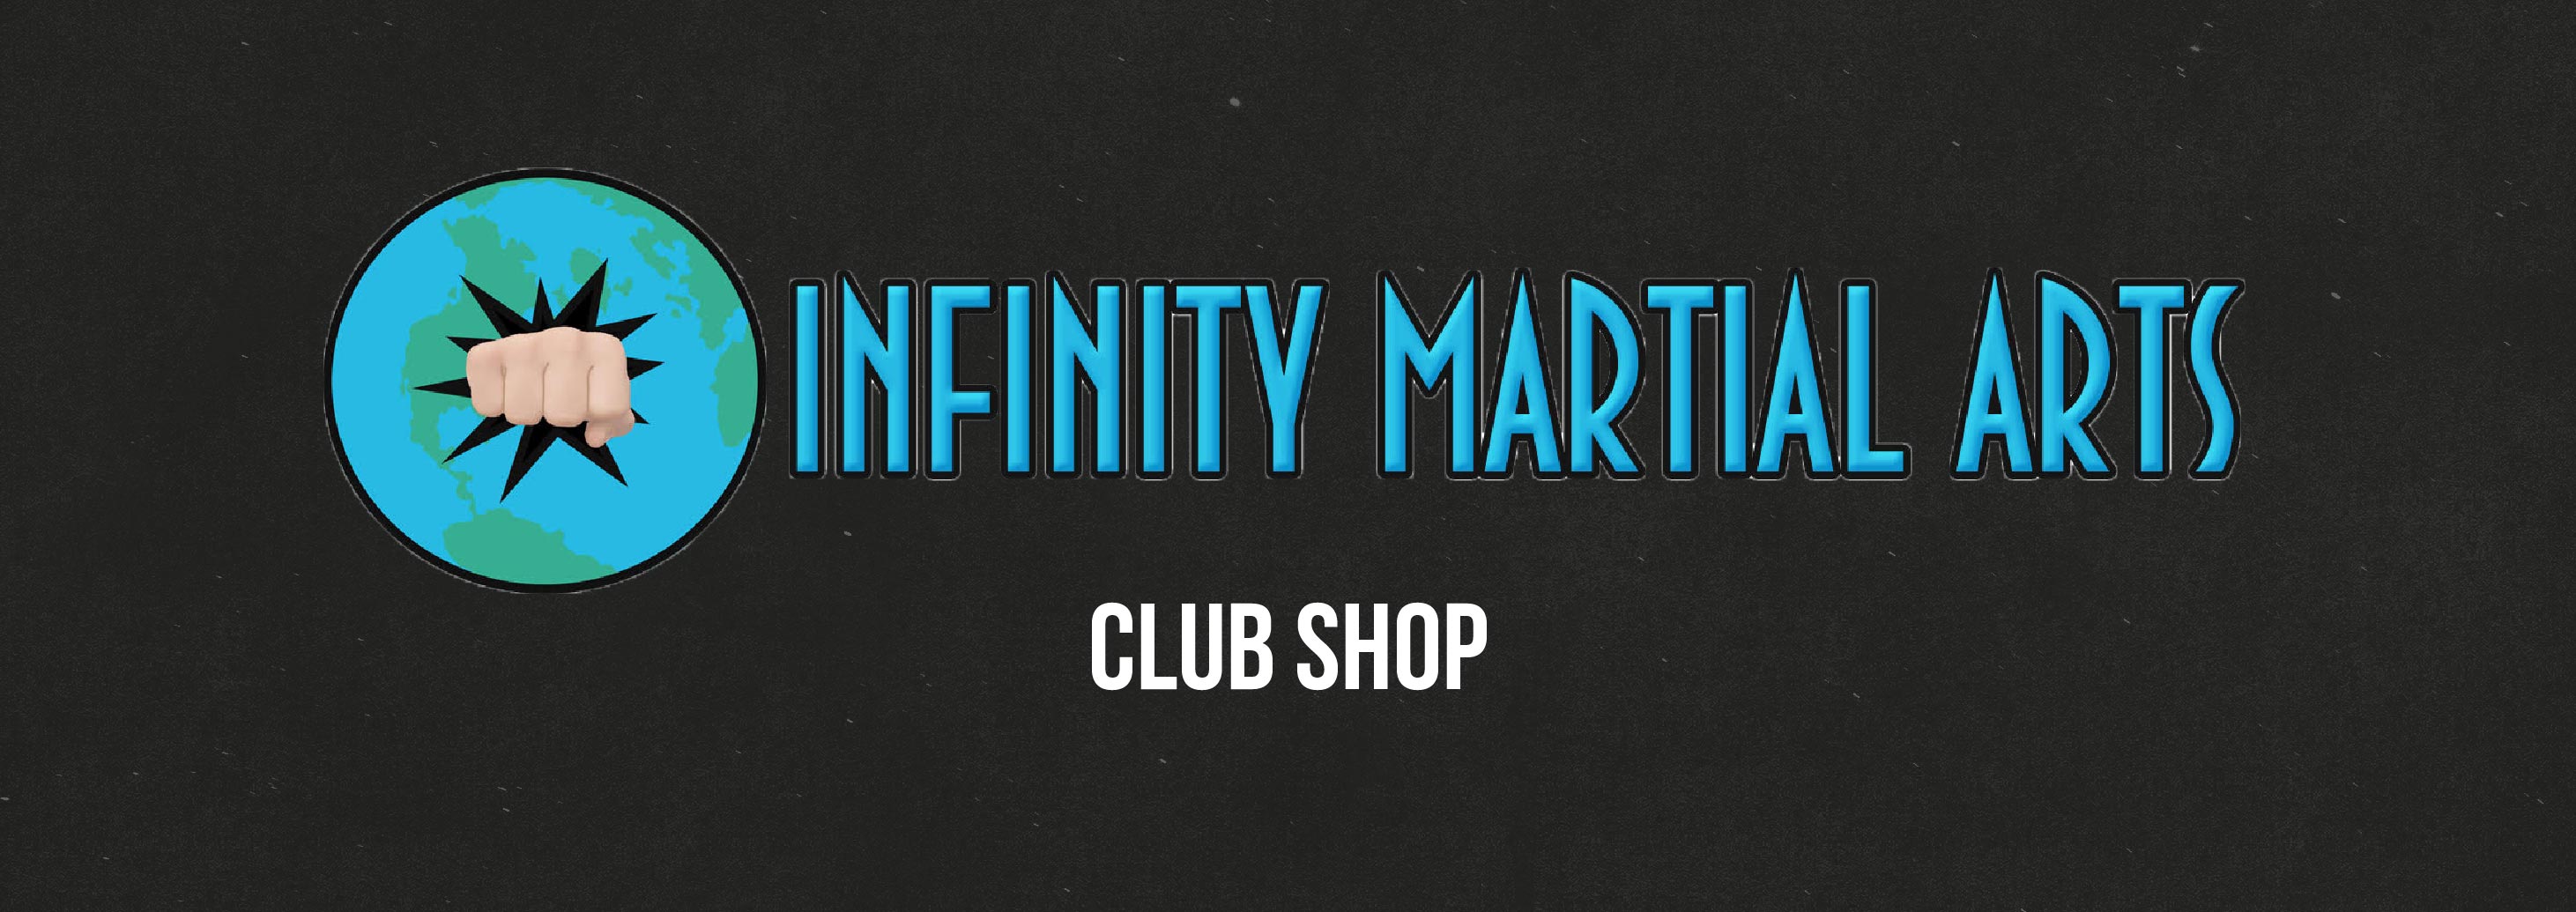 Infinity Martial Arts Club Shop